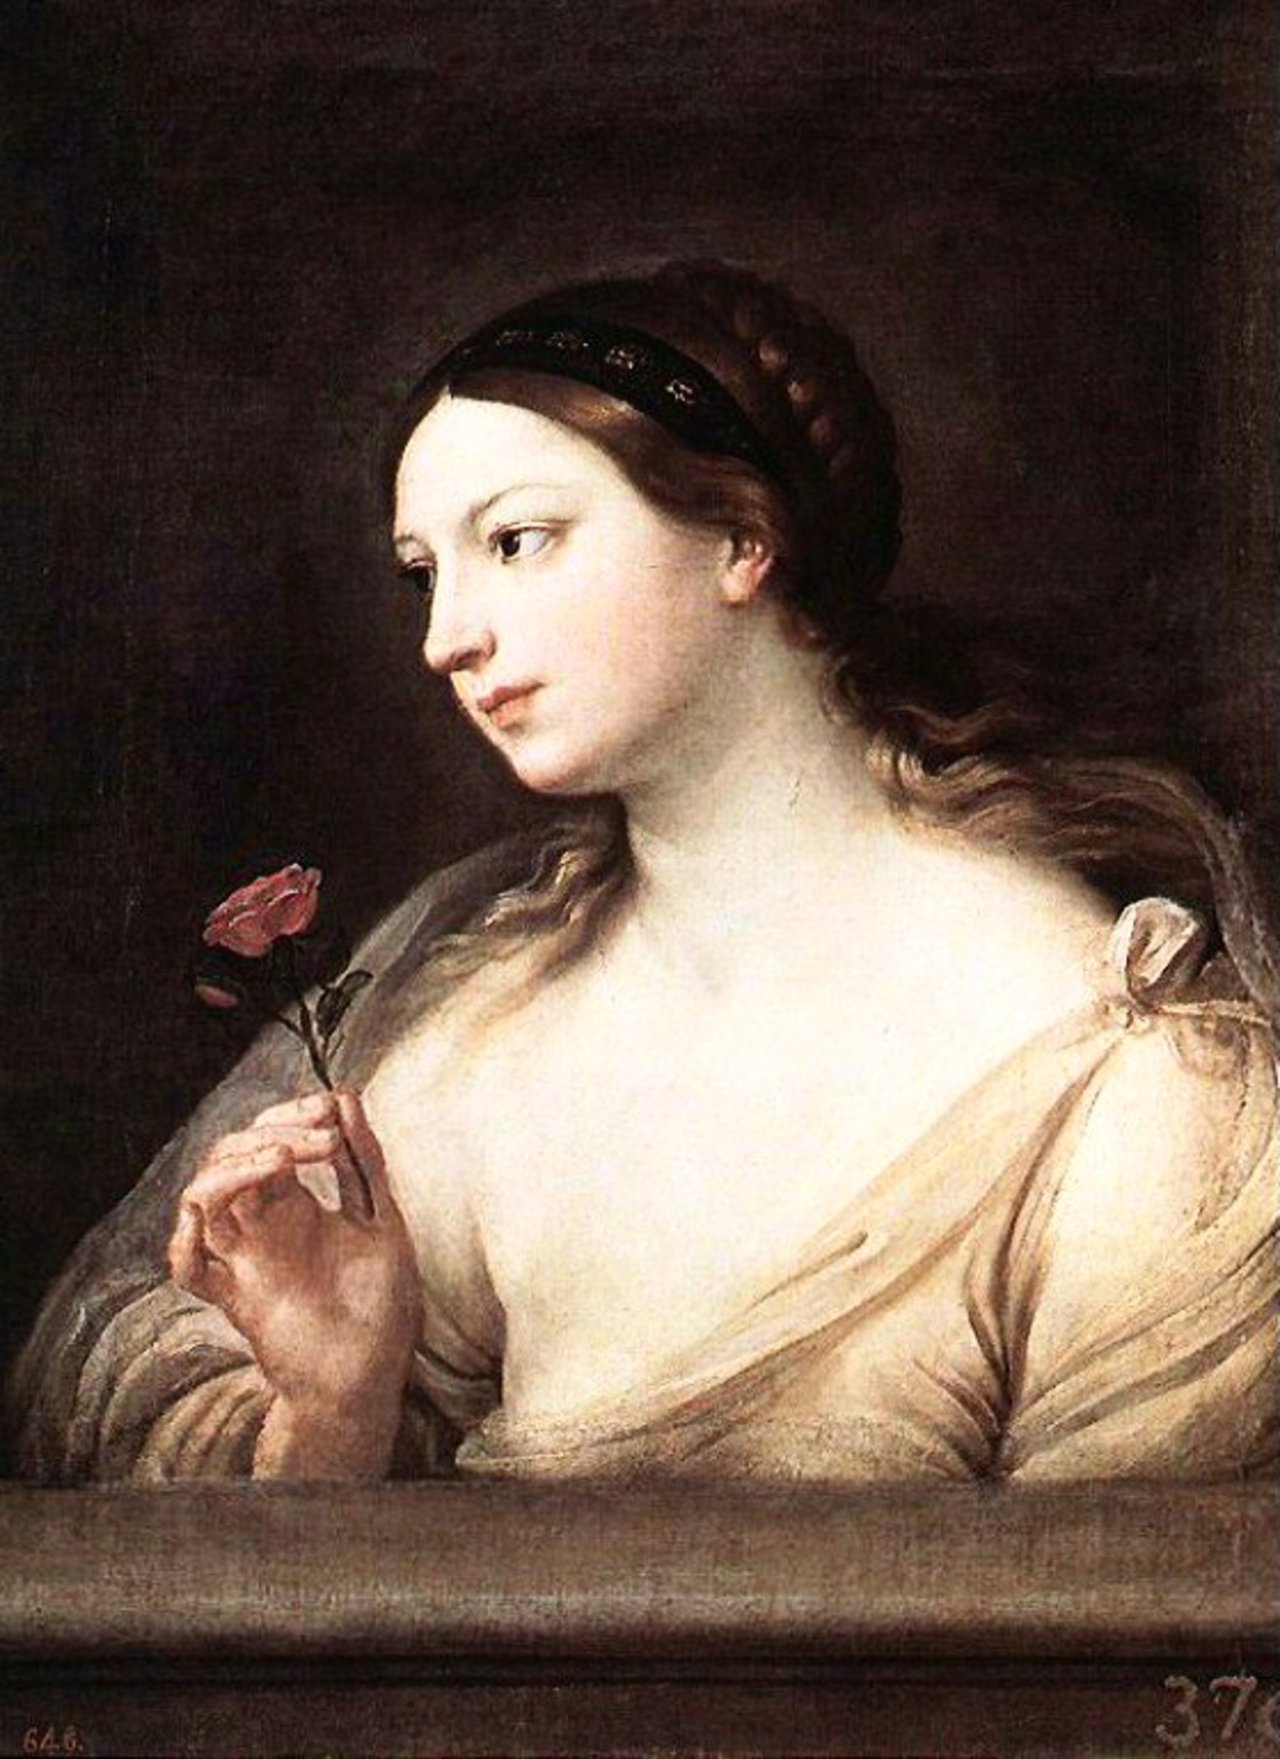 RT @LambersAlie: " Girl With A Rose" by Guido Reni ,1575-1642. https://t.co/HA16btDz7j